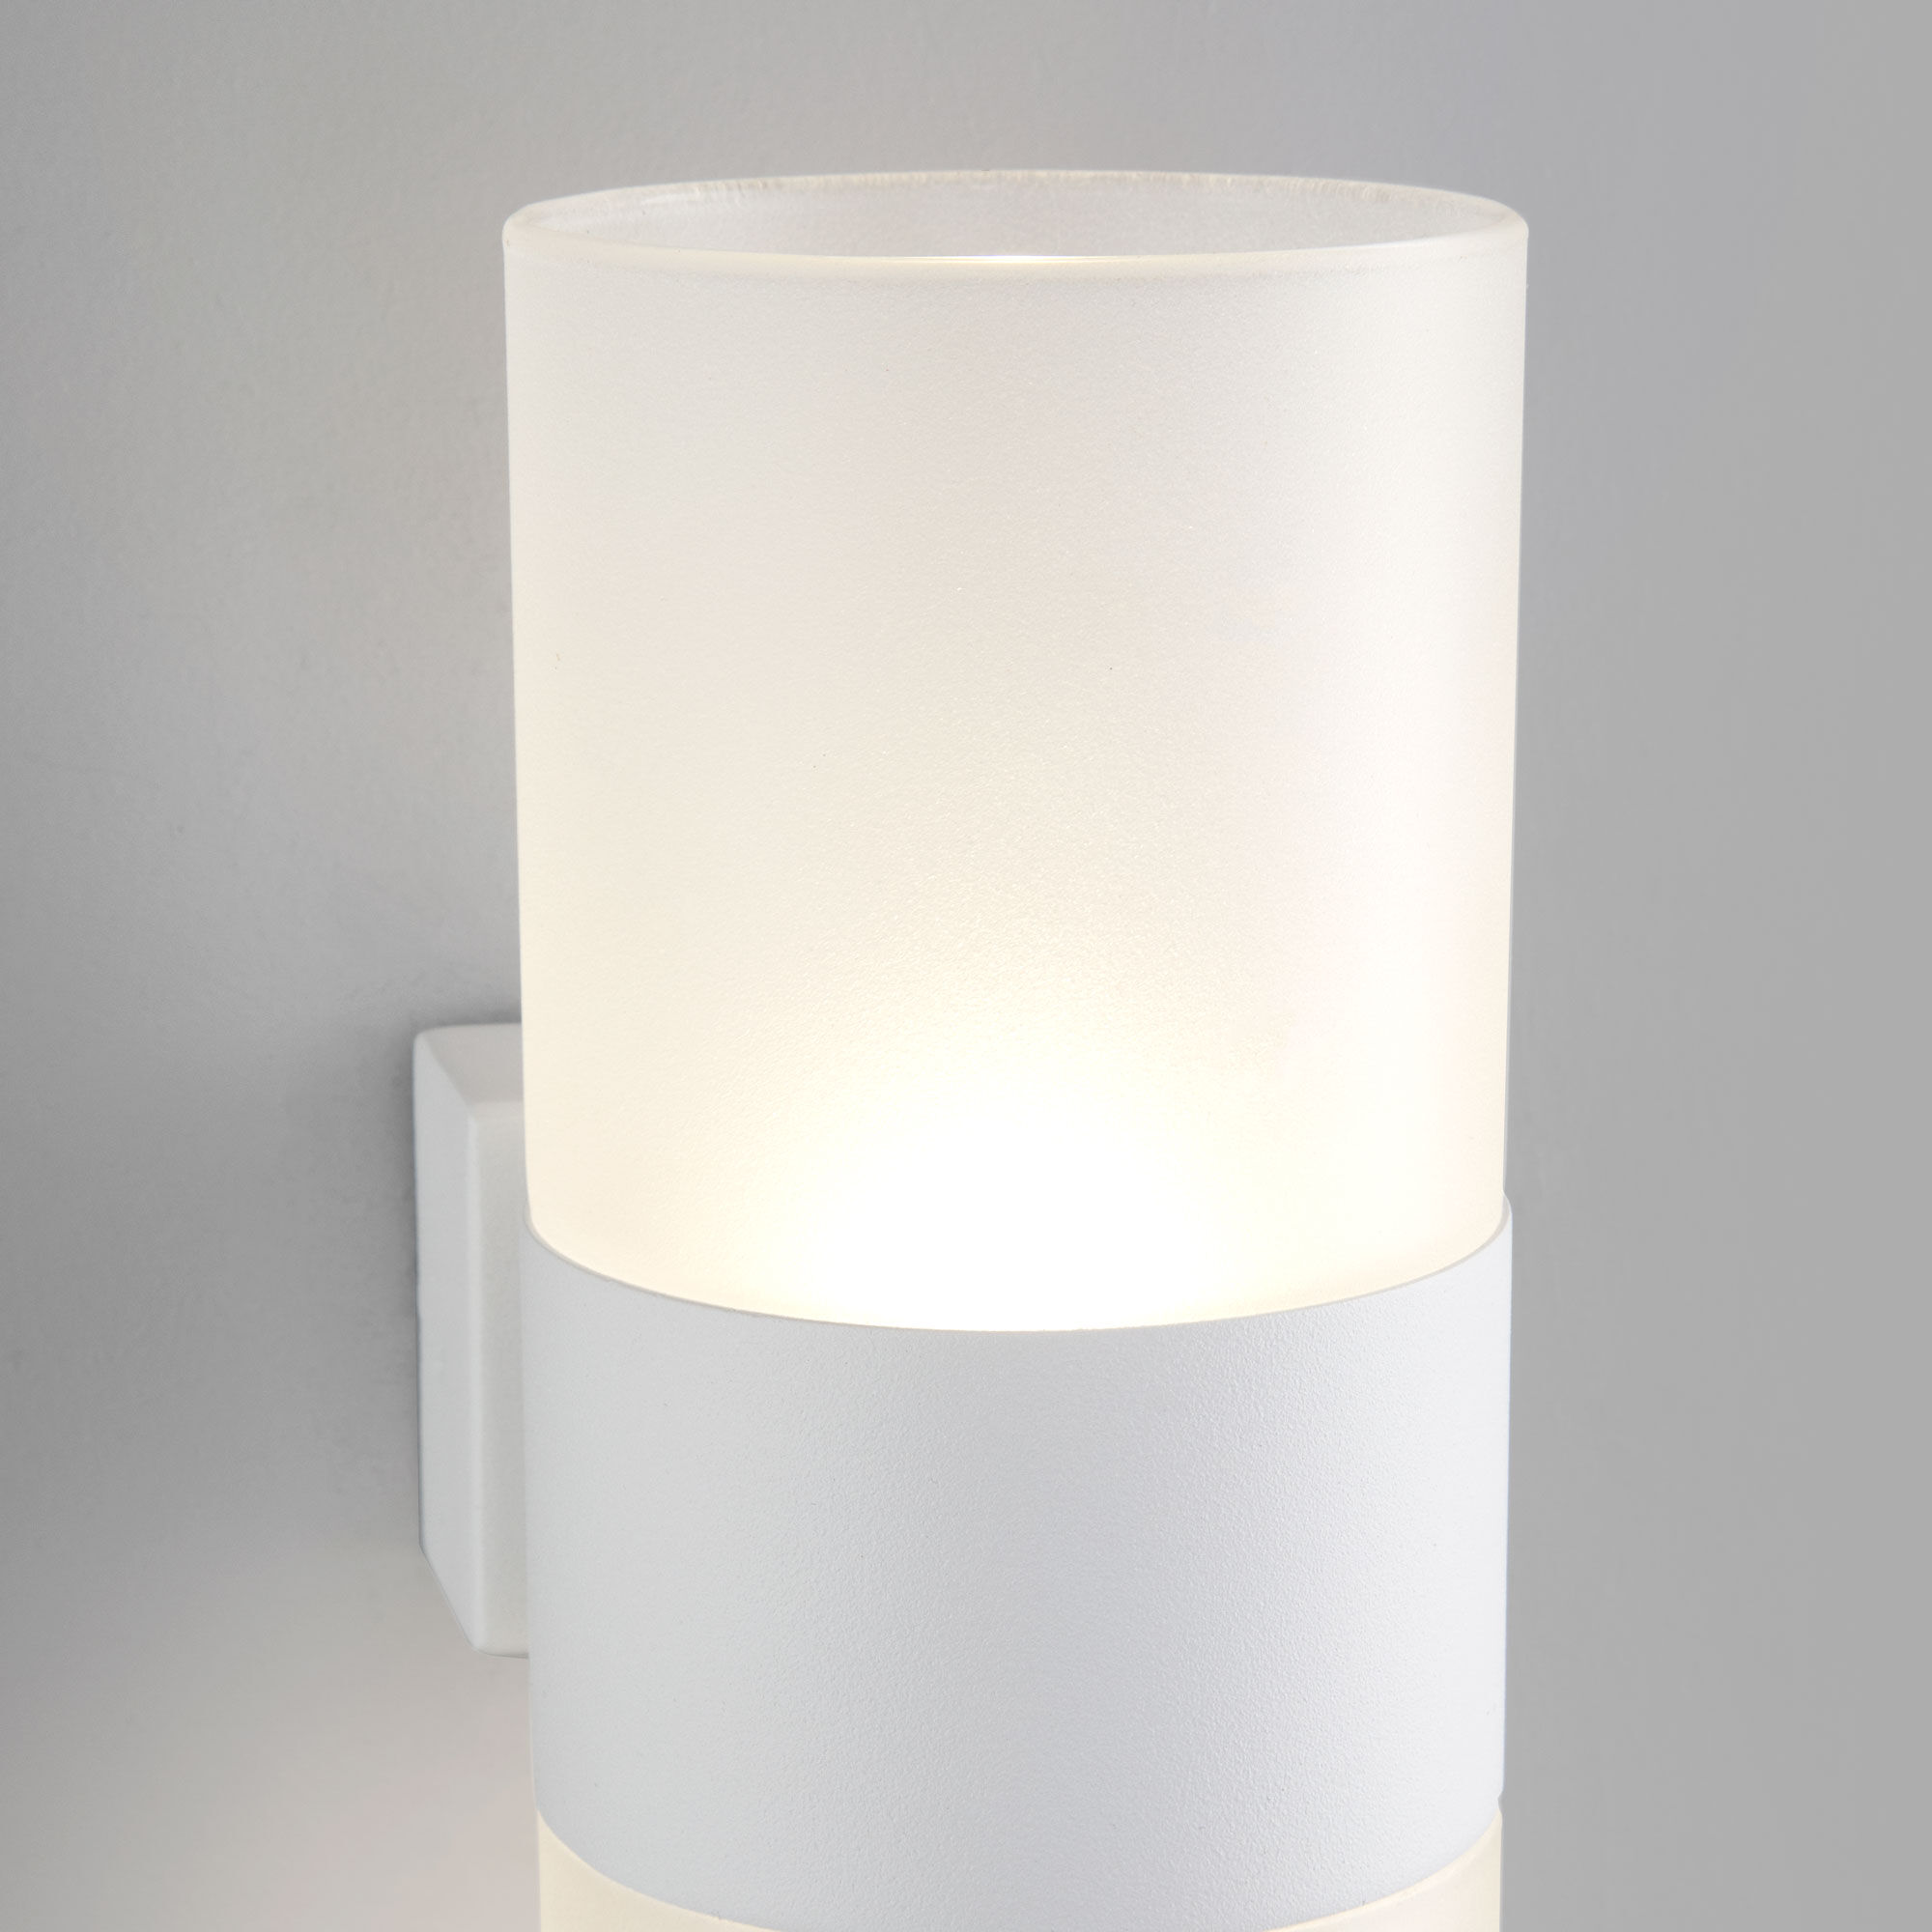  Eurosvet 40021/1 LED настенный светильник белый/матовый